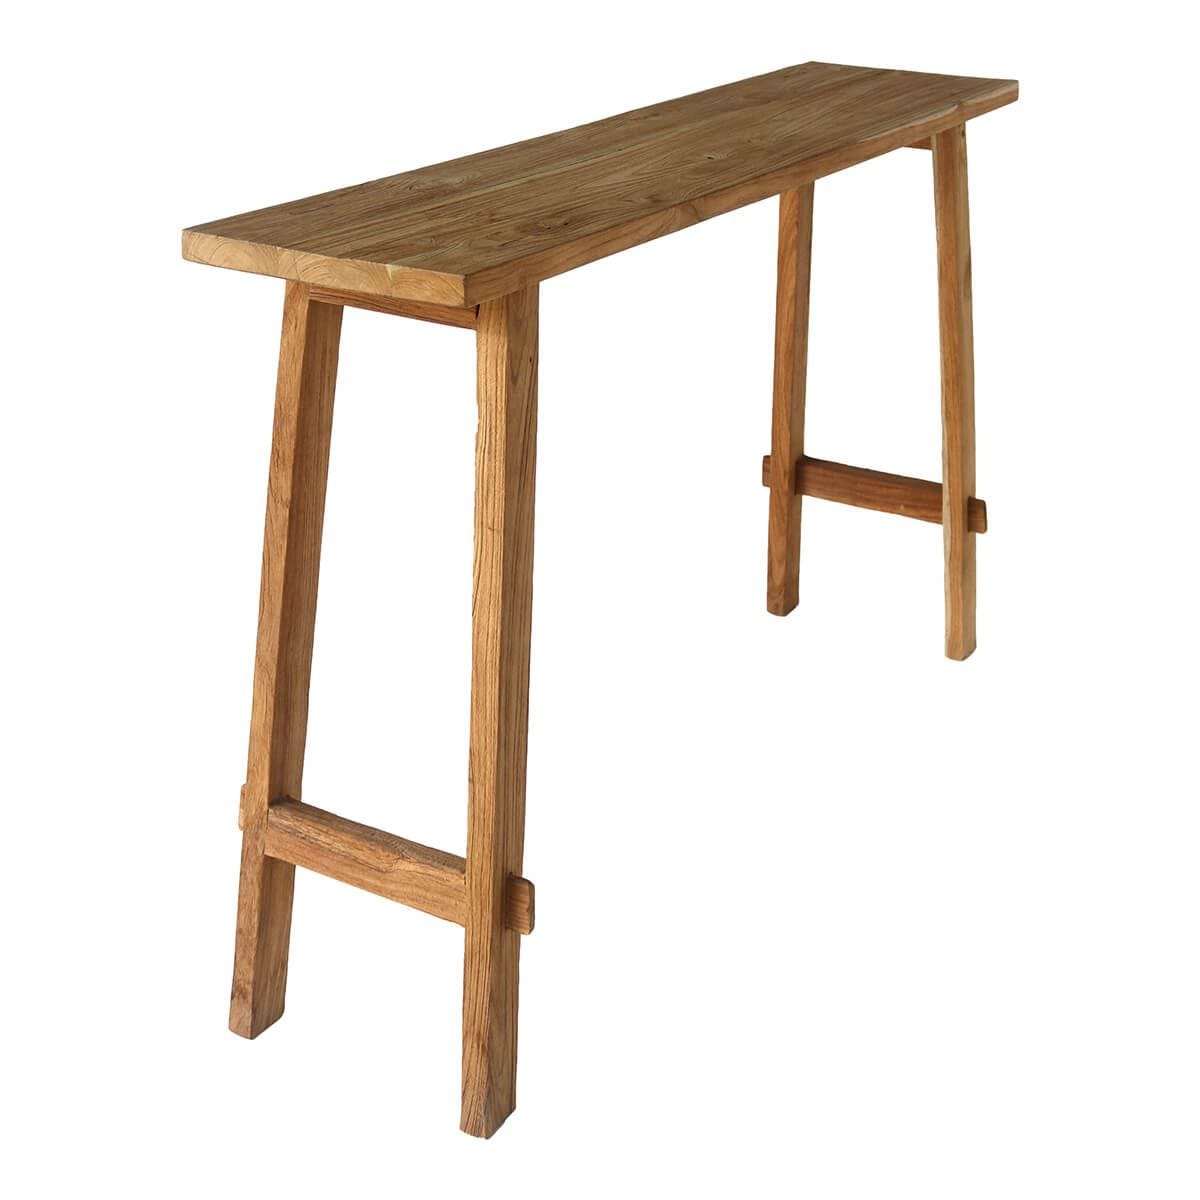 Table mange debout en bois chêne, 150x90xH89cm, EP 4cm - KASTLE